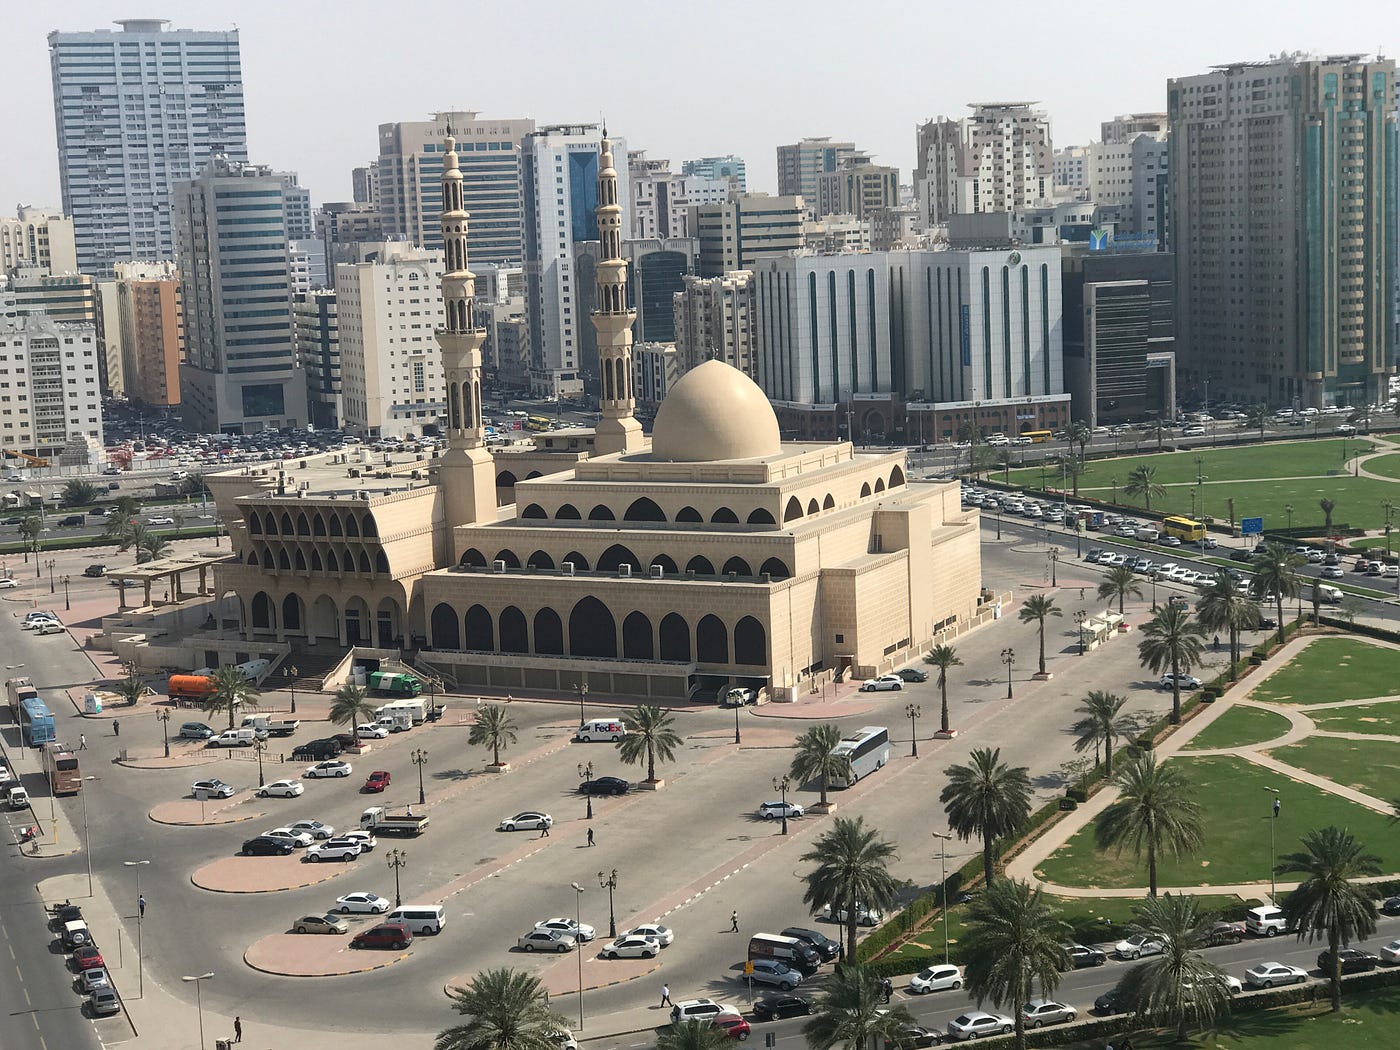 Demystifying Sharjah's iconic King Faisal Mosque | by سلطان سعود القاسمي |  Medium